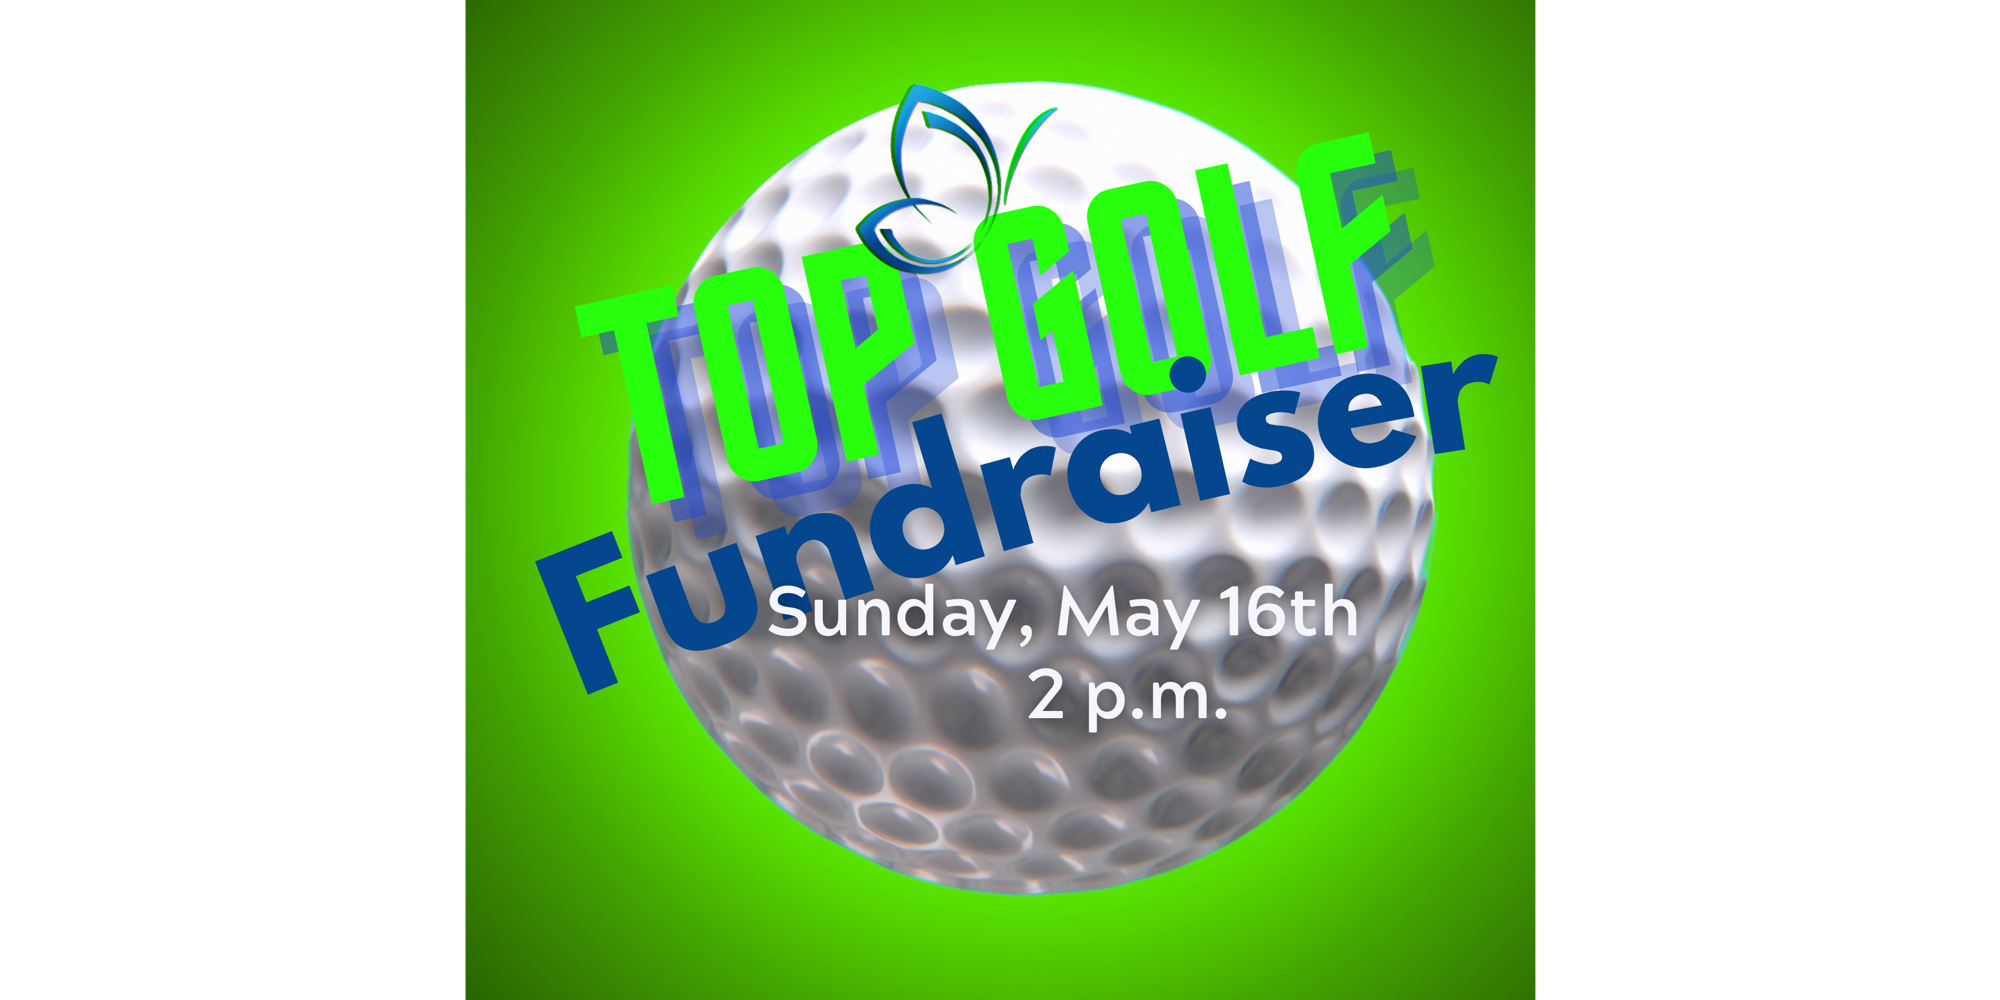 Top Golf Fundraiser for Fresh Hope promotional image